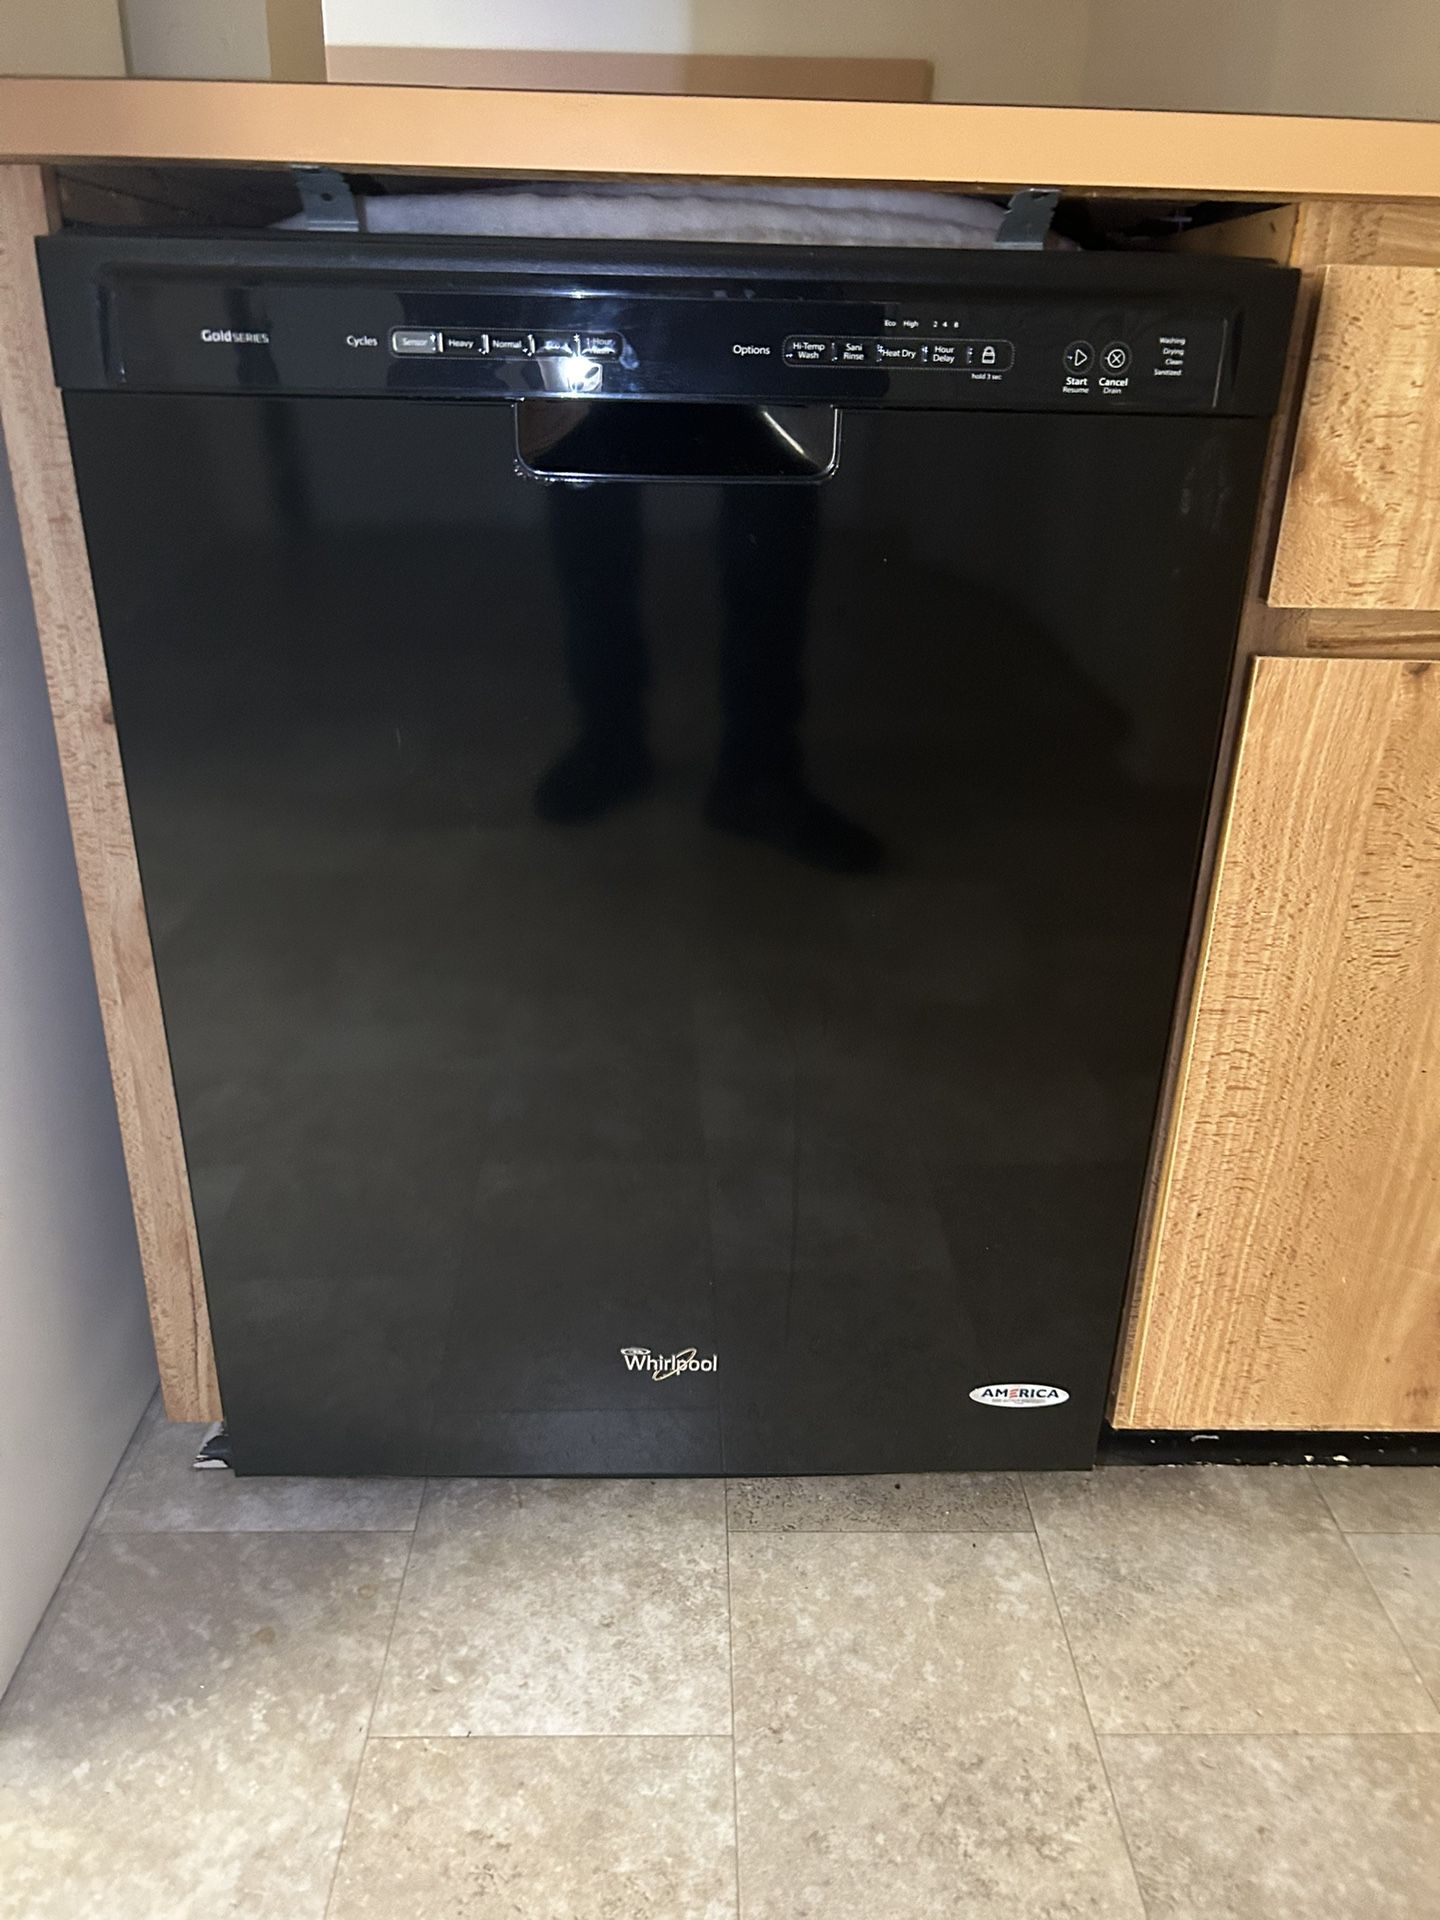 Kitchen Package $200 Refrigerator, Microwave, Dishwasher!